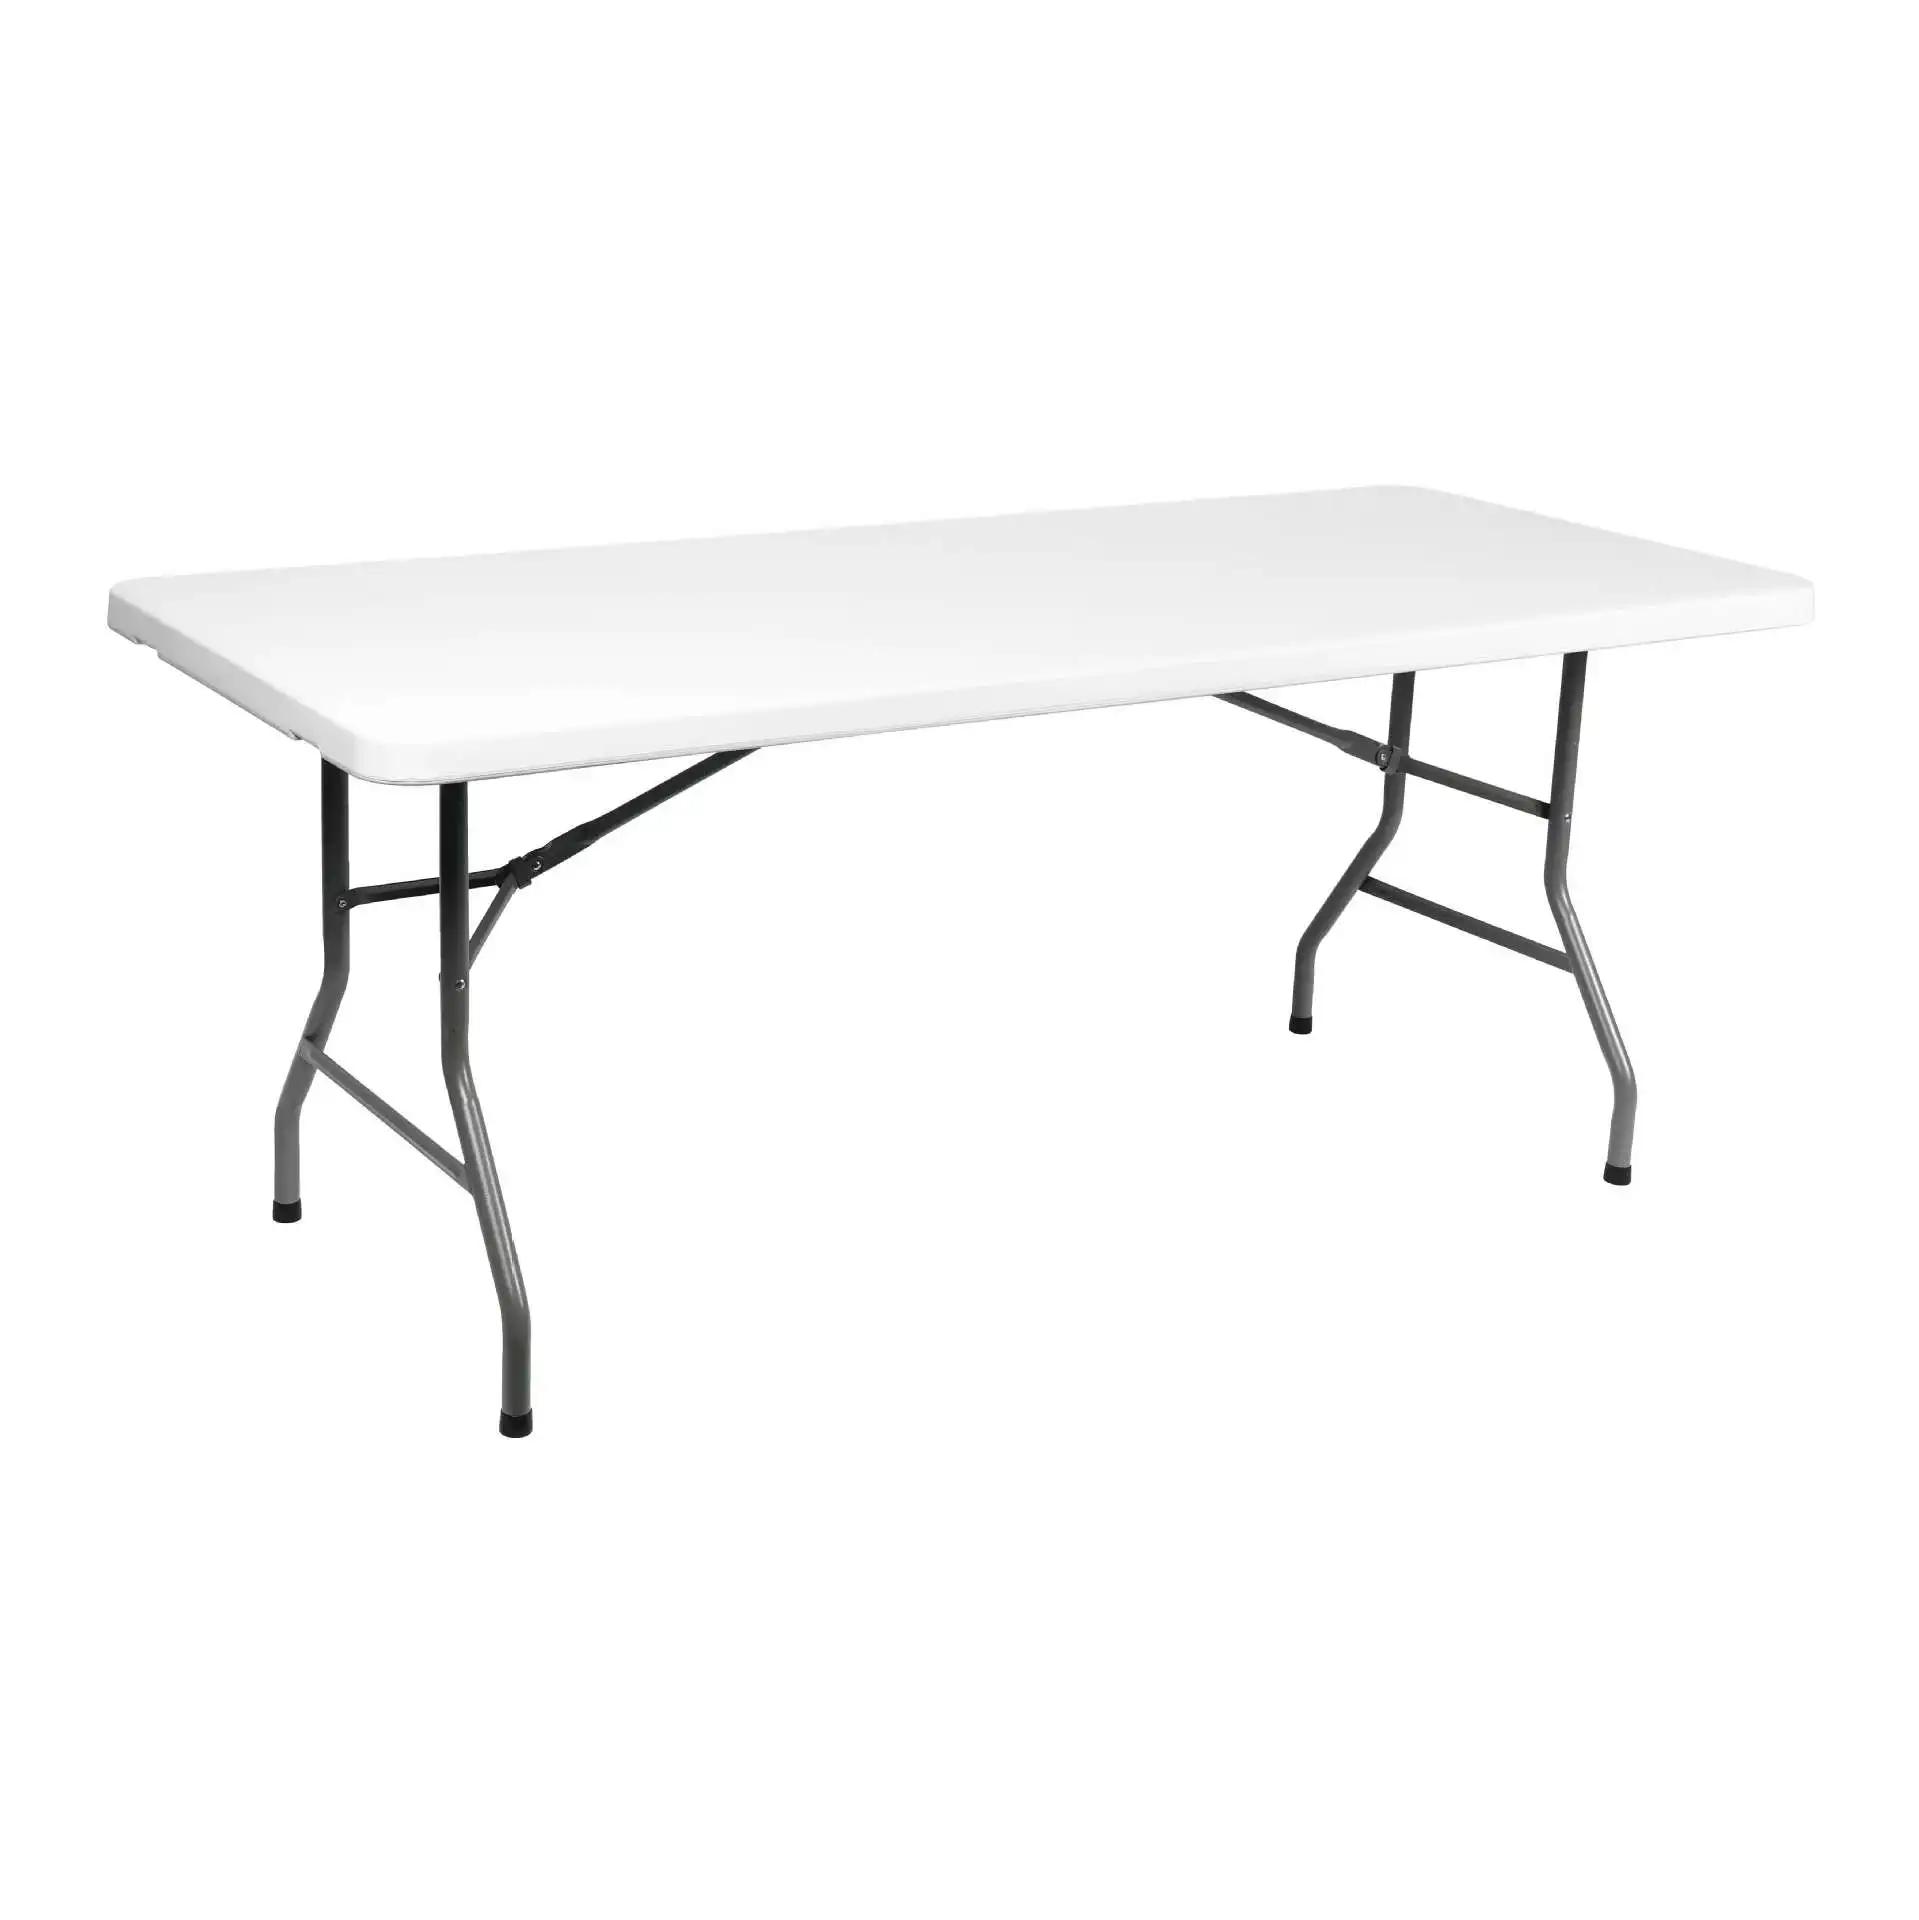 High quality party folding tables sturdy plastic folding tables Convenient white folding table for storage